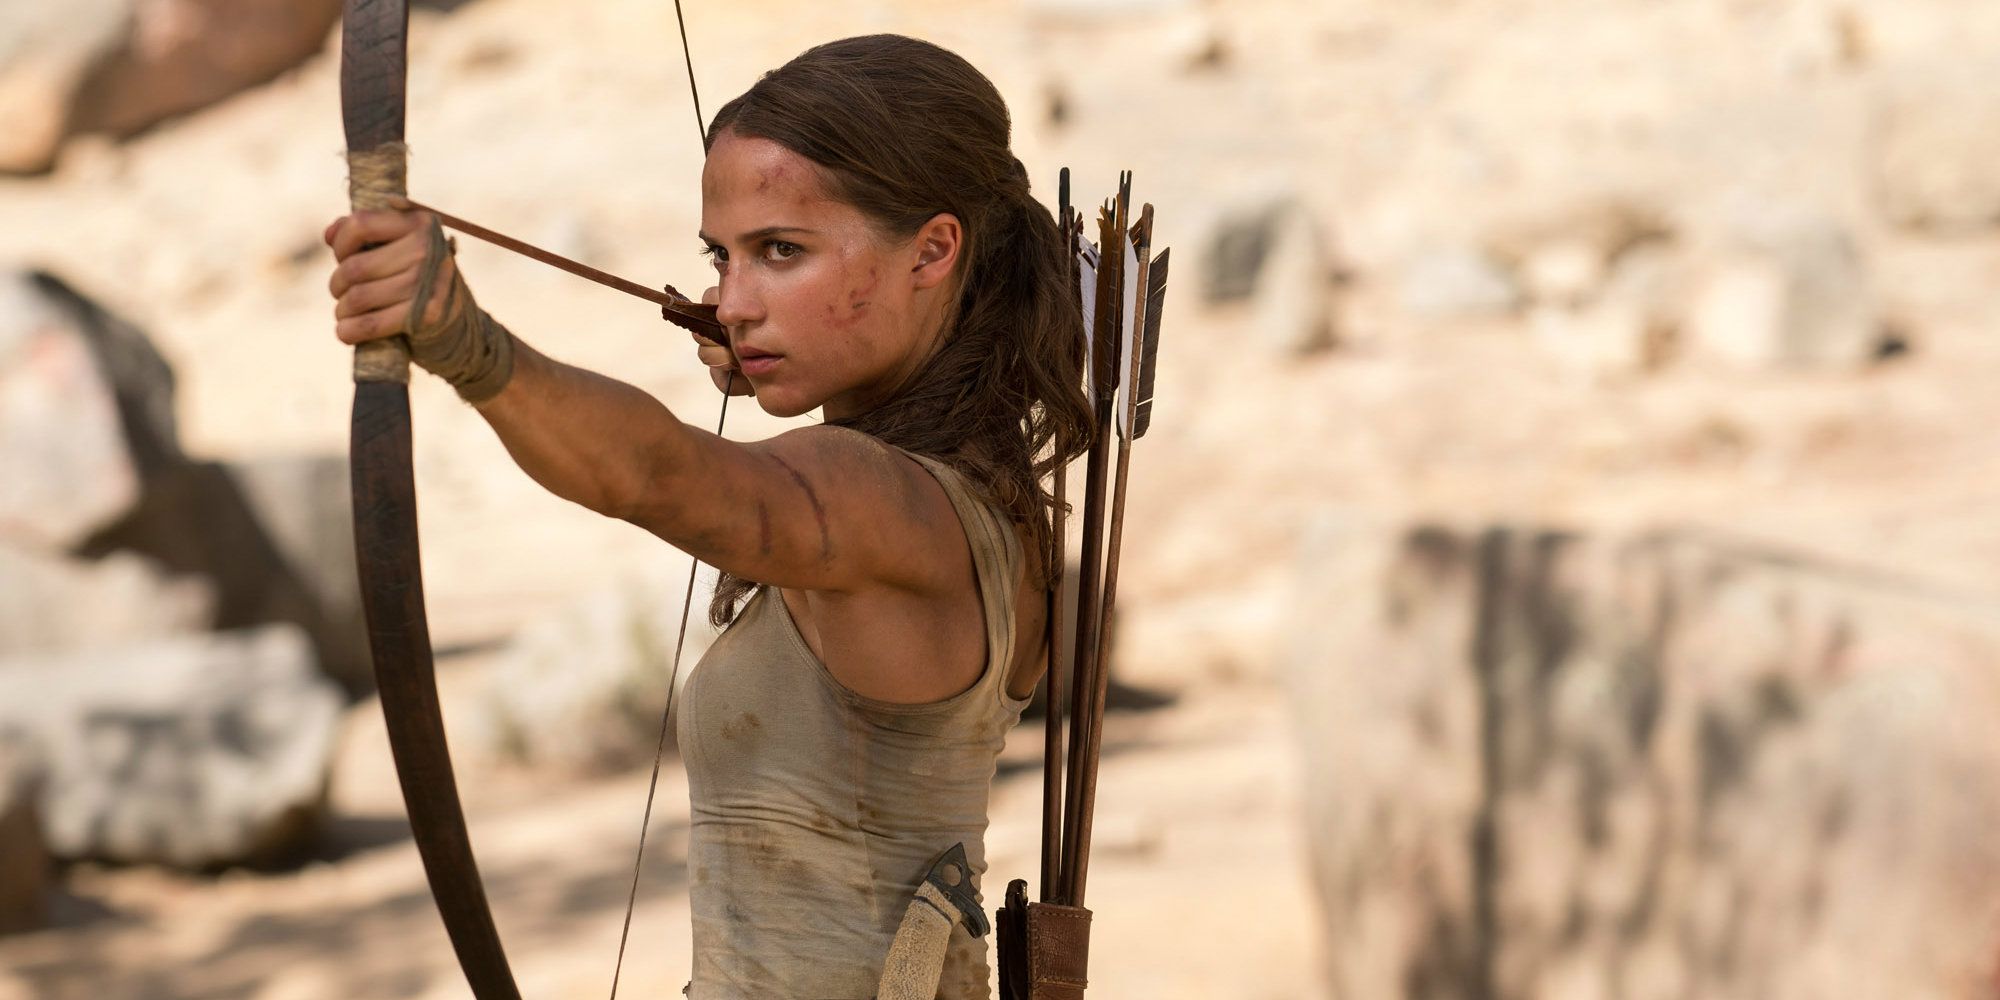 Lara Croft using a bow and arrow in Tomb Raider